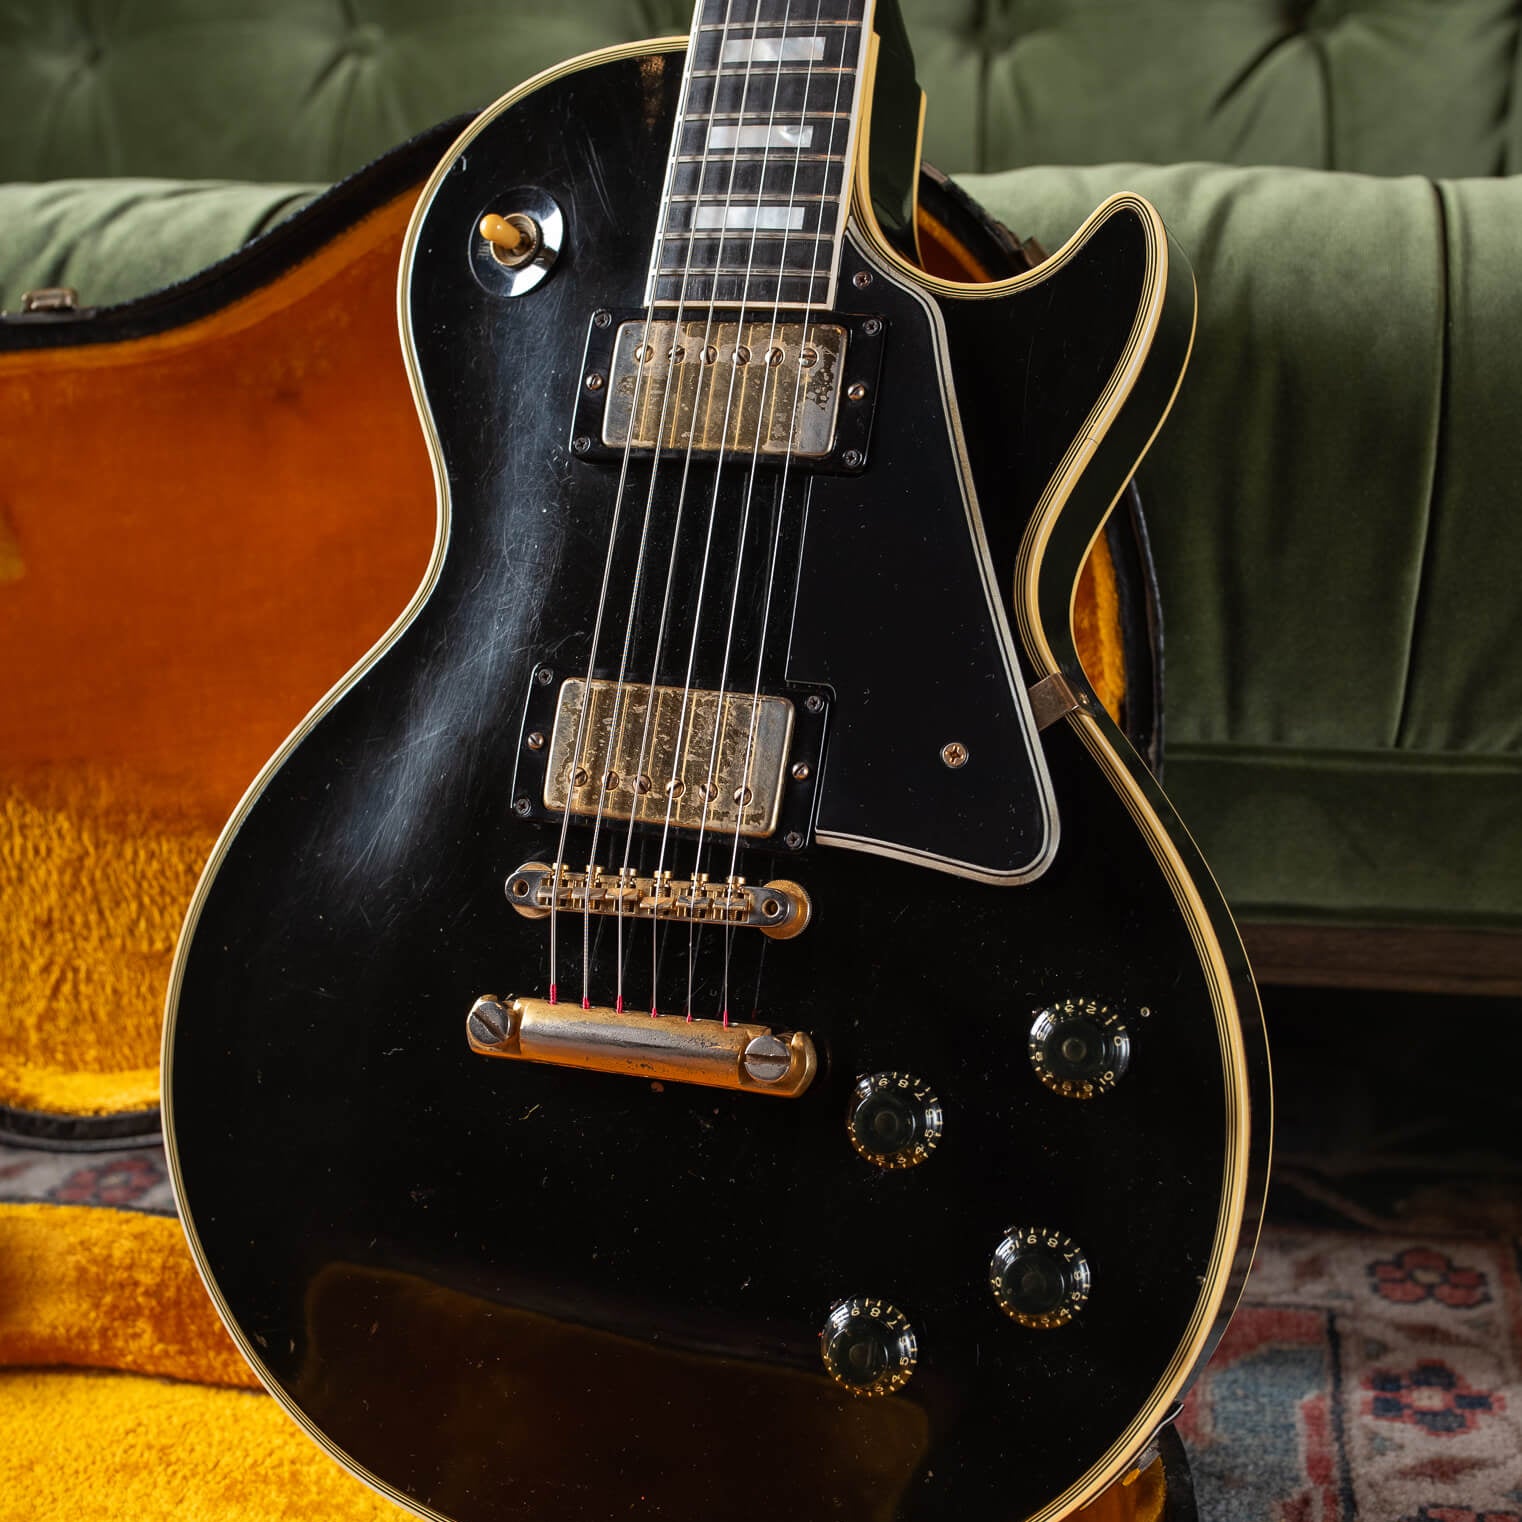 1958 Gibson Les Paul Custom Black with two humbucking pickups